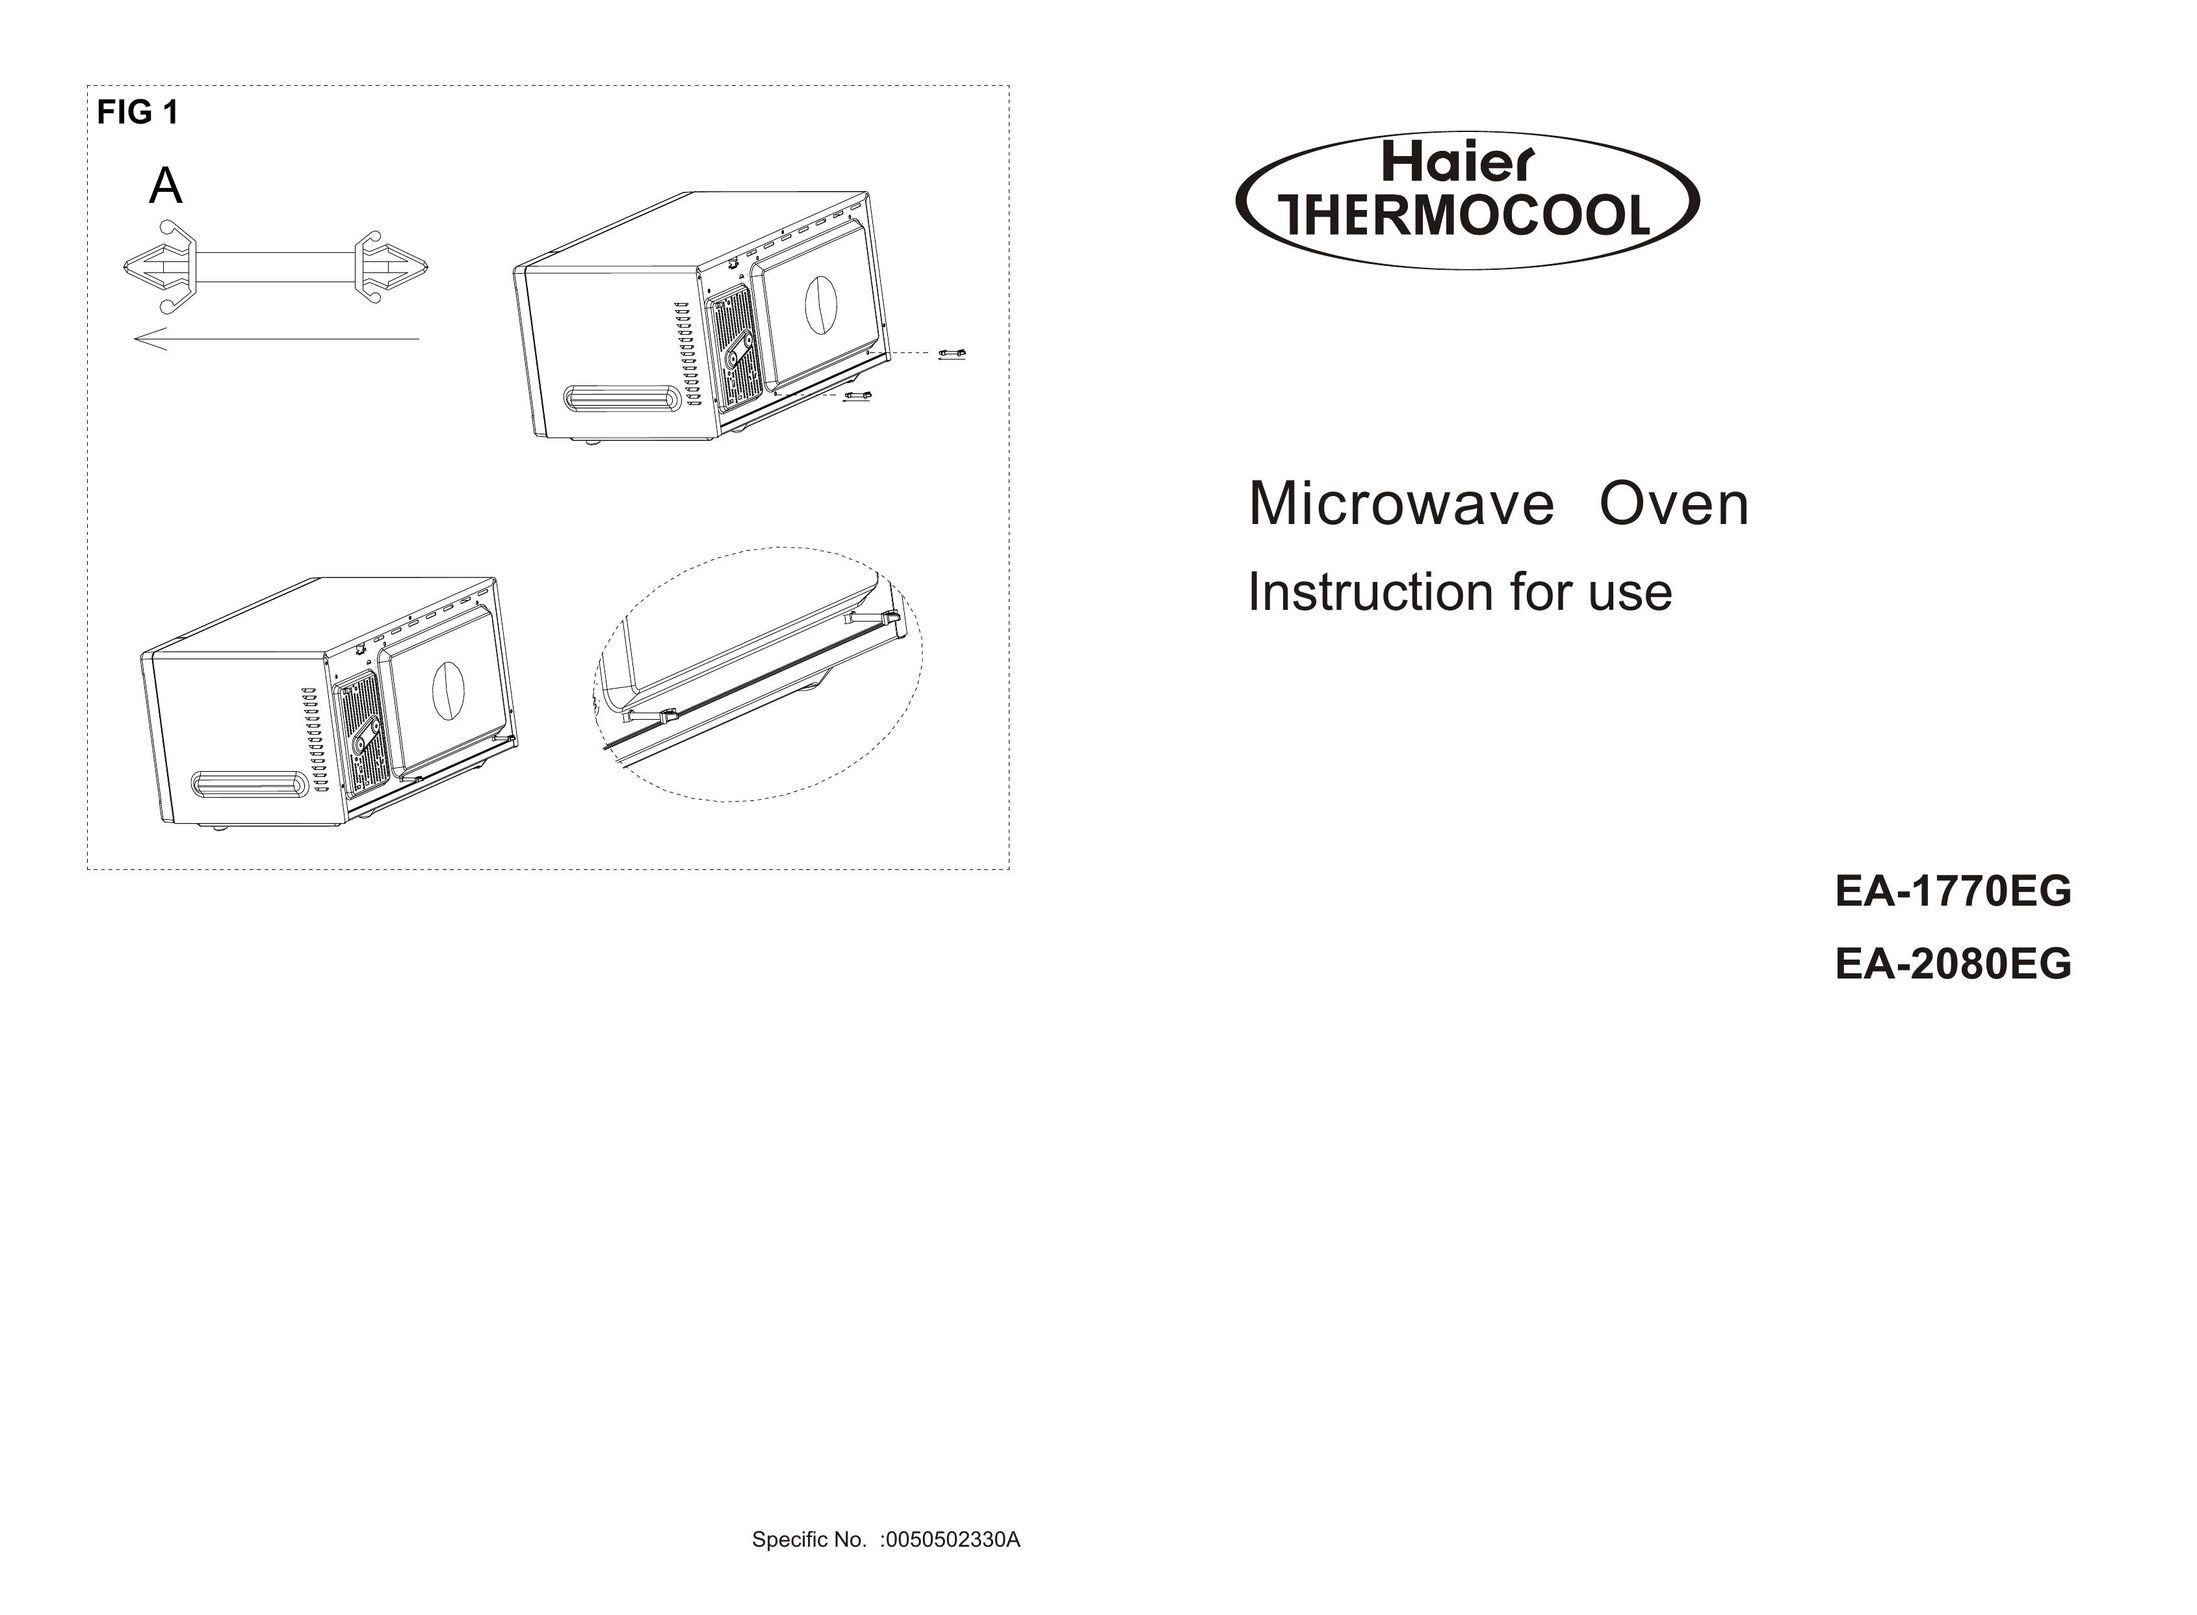 Haier EA-2080EG Microwave Oven User Manual